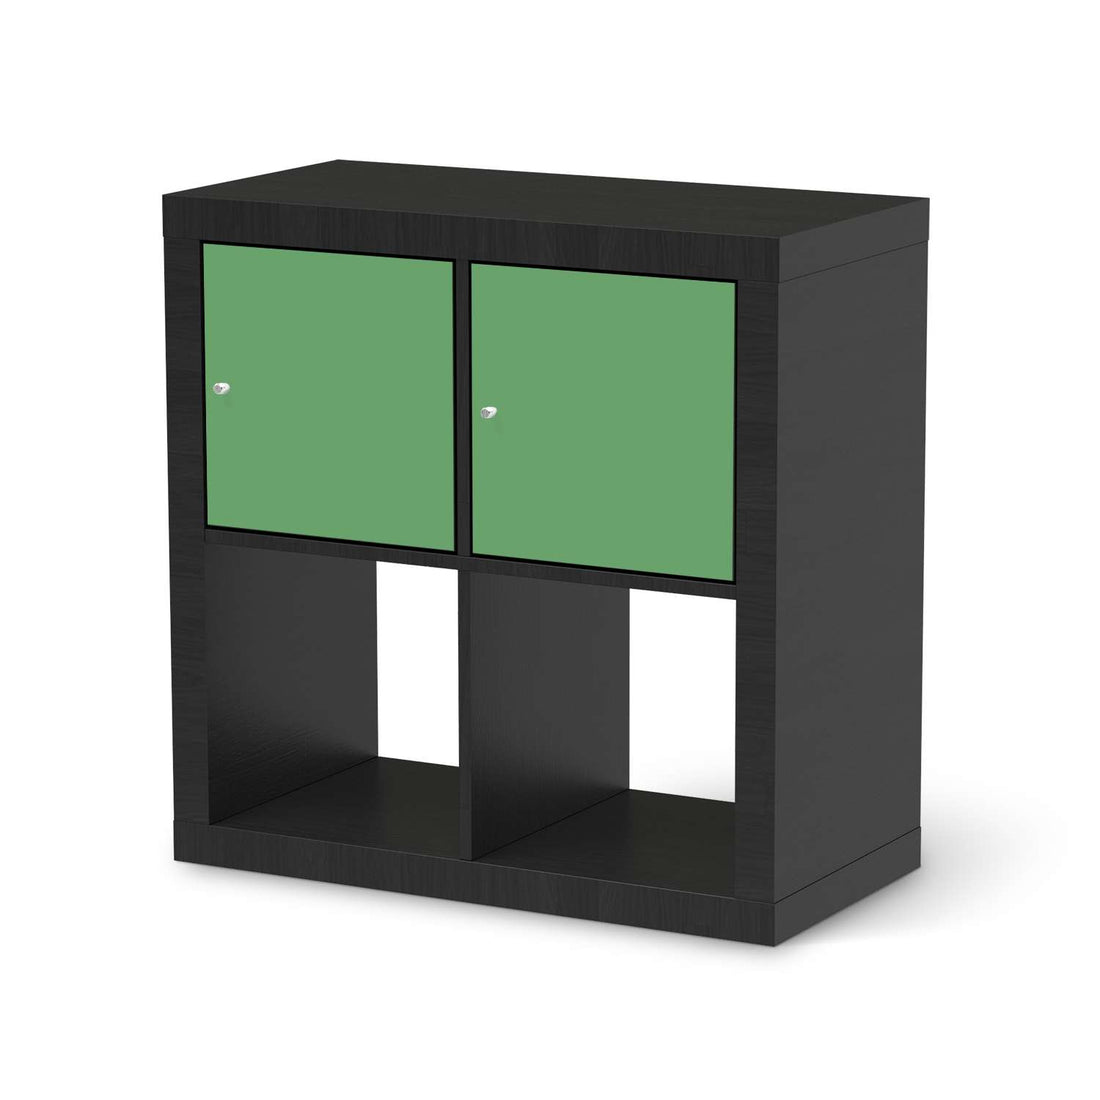 Möbel Klebefolie Grün Light - IKEA Expedit Regal 2 Türen Quer - schwarz